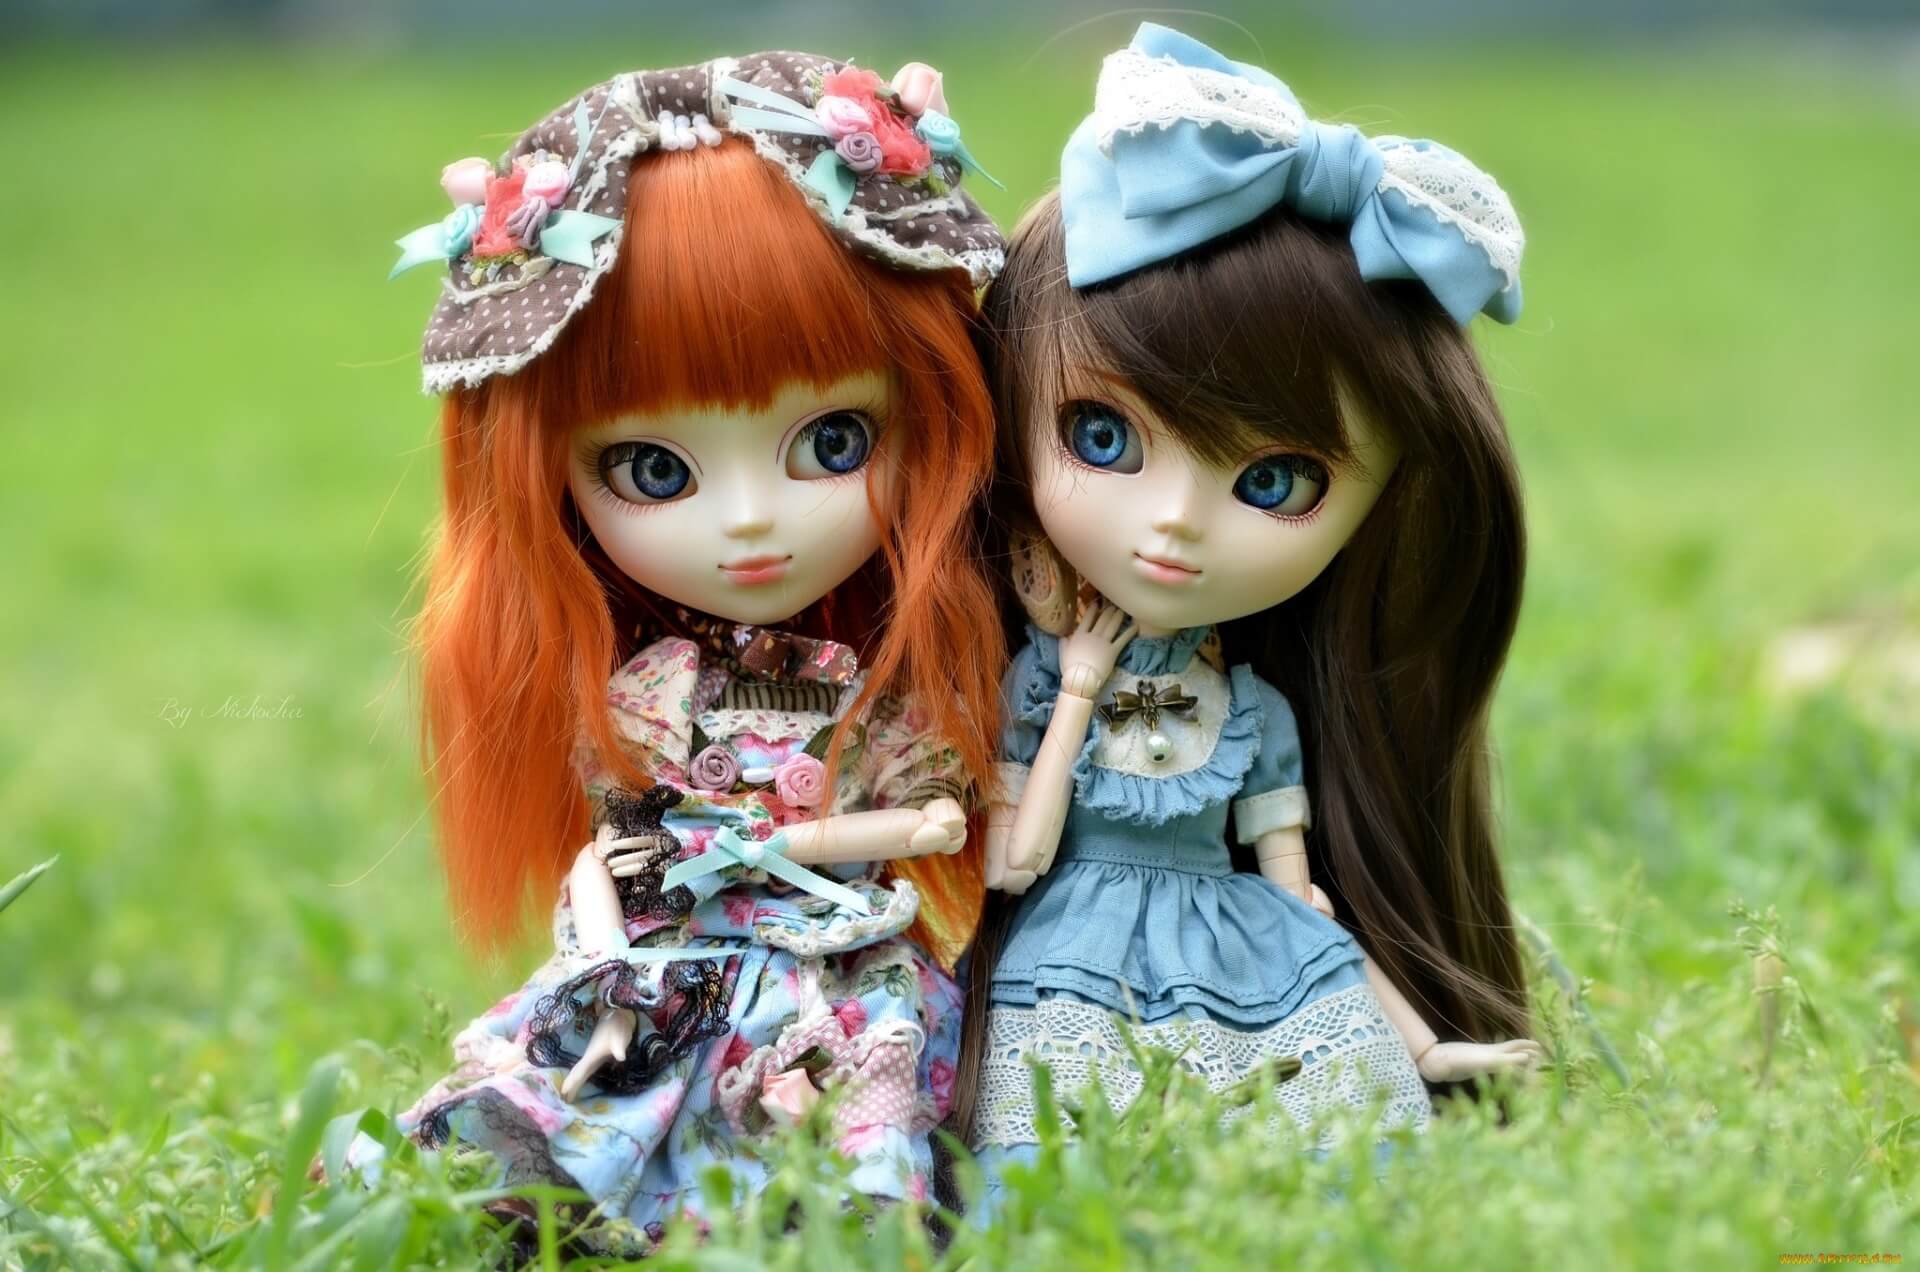 Best Cute Barbies Dolls HD Wallpaper & Background Image #cute #dolls #image. Doll image hd, Beautiful barbie dolls, Cute dolls